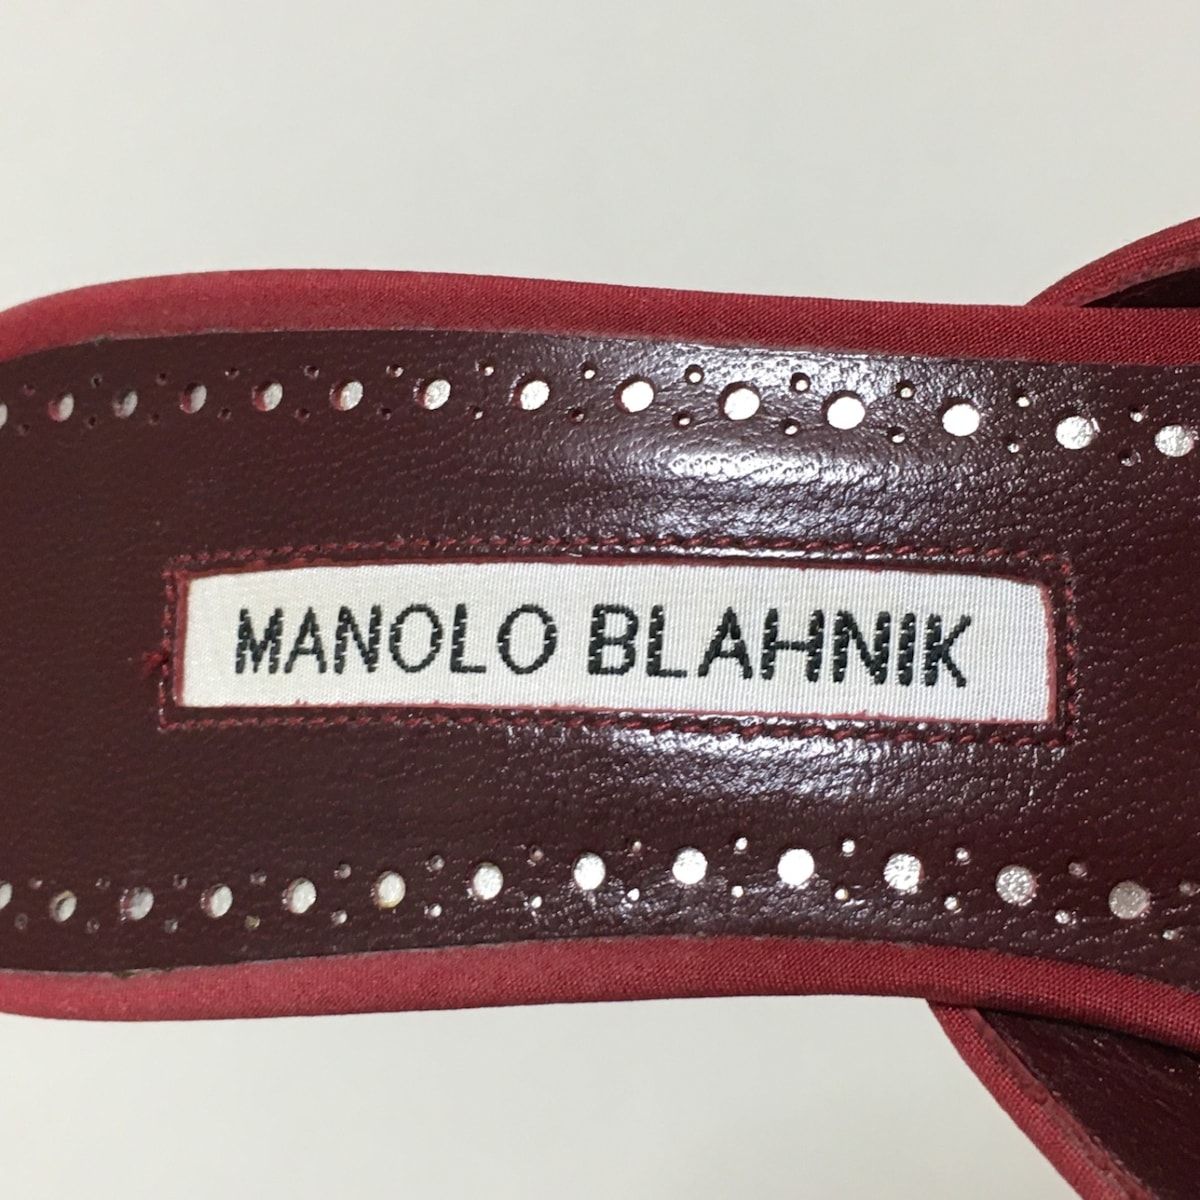 MANOLO BLAHNIK(マノロブラニク) ミュール 37 レディース メイセール レッド ビジュー サテン - メルカリ